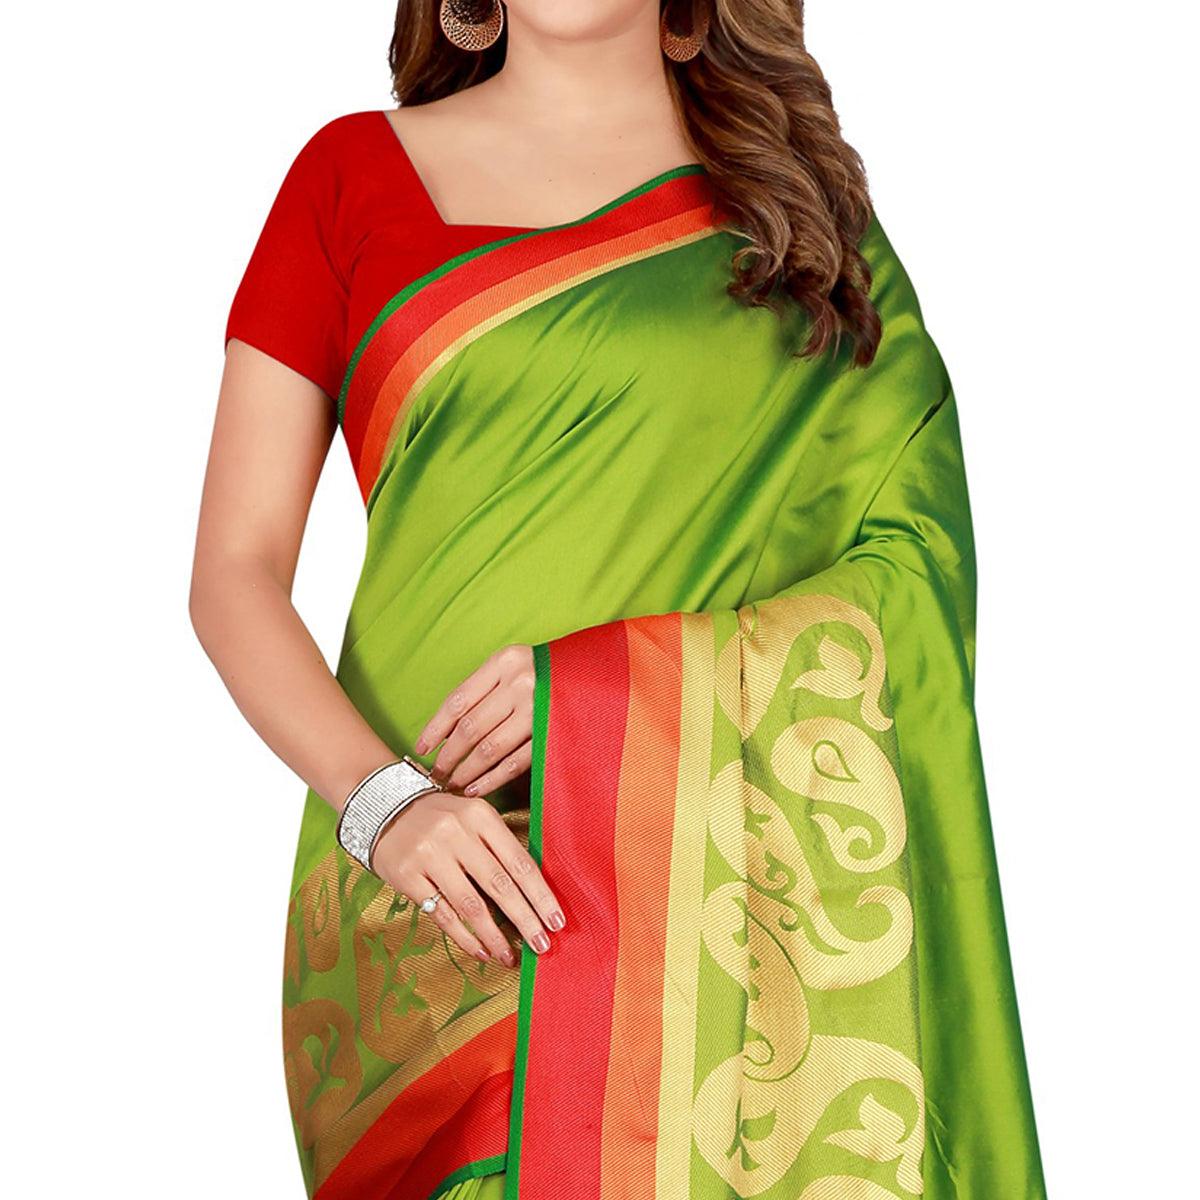 Adorable Green Colored Festive Wear Woven Silk Saree - Peachmode